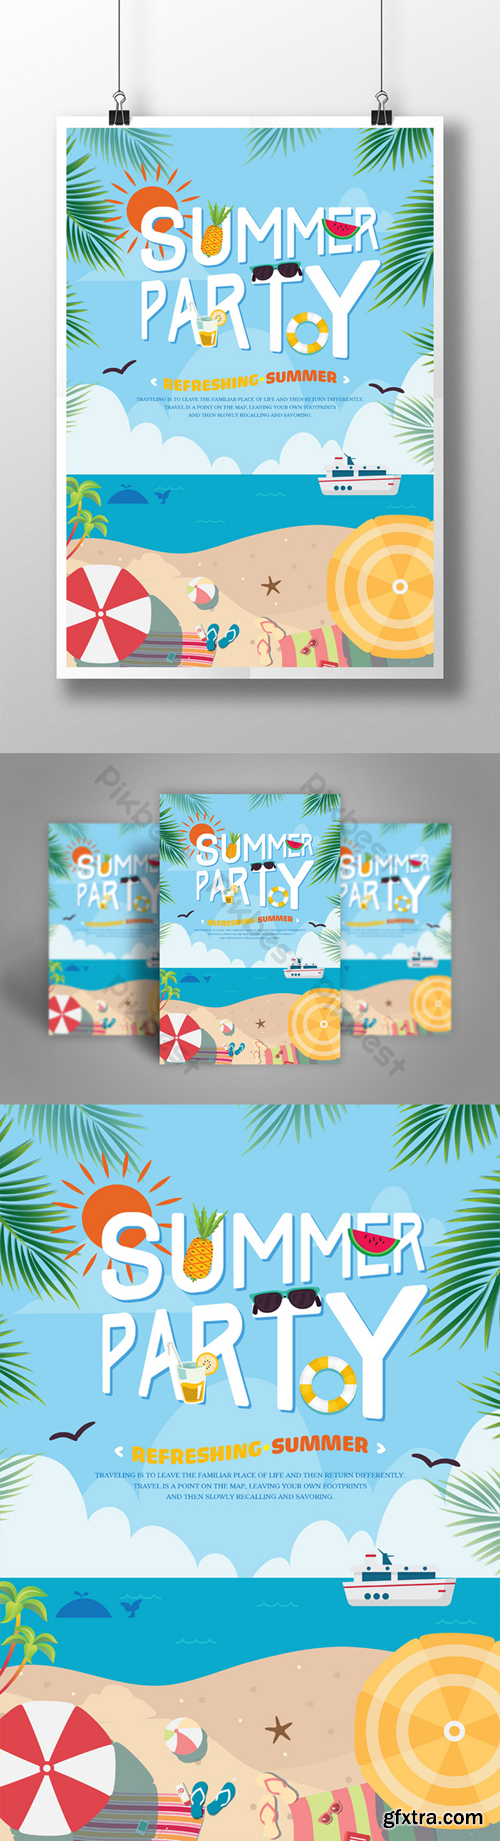 Summer beach party poster Template PSD